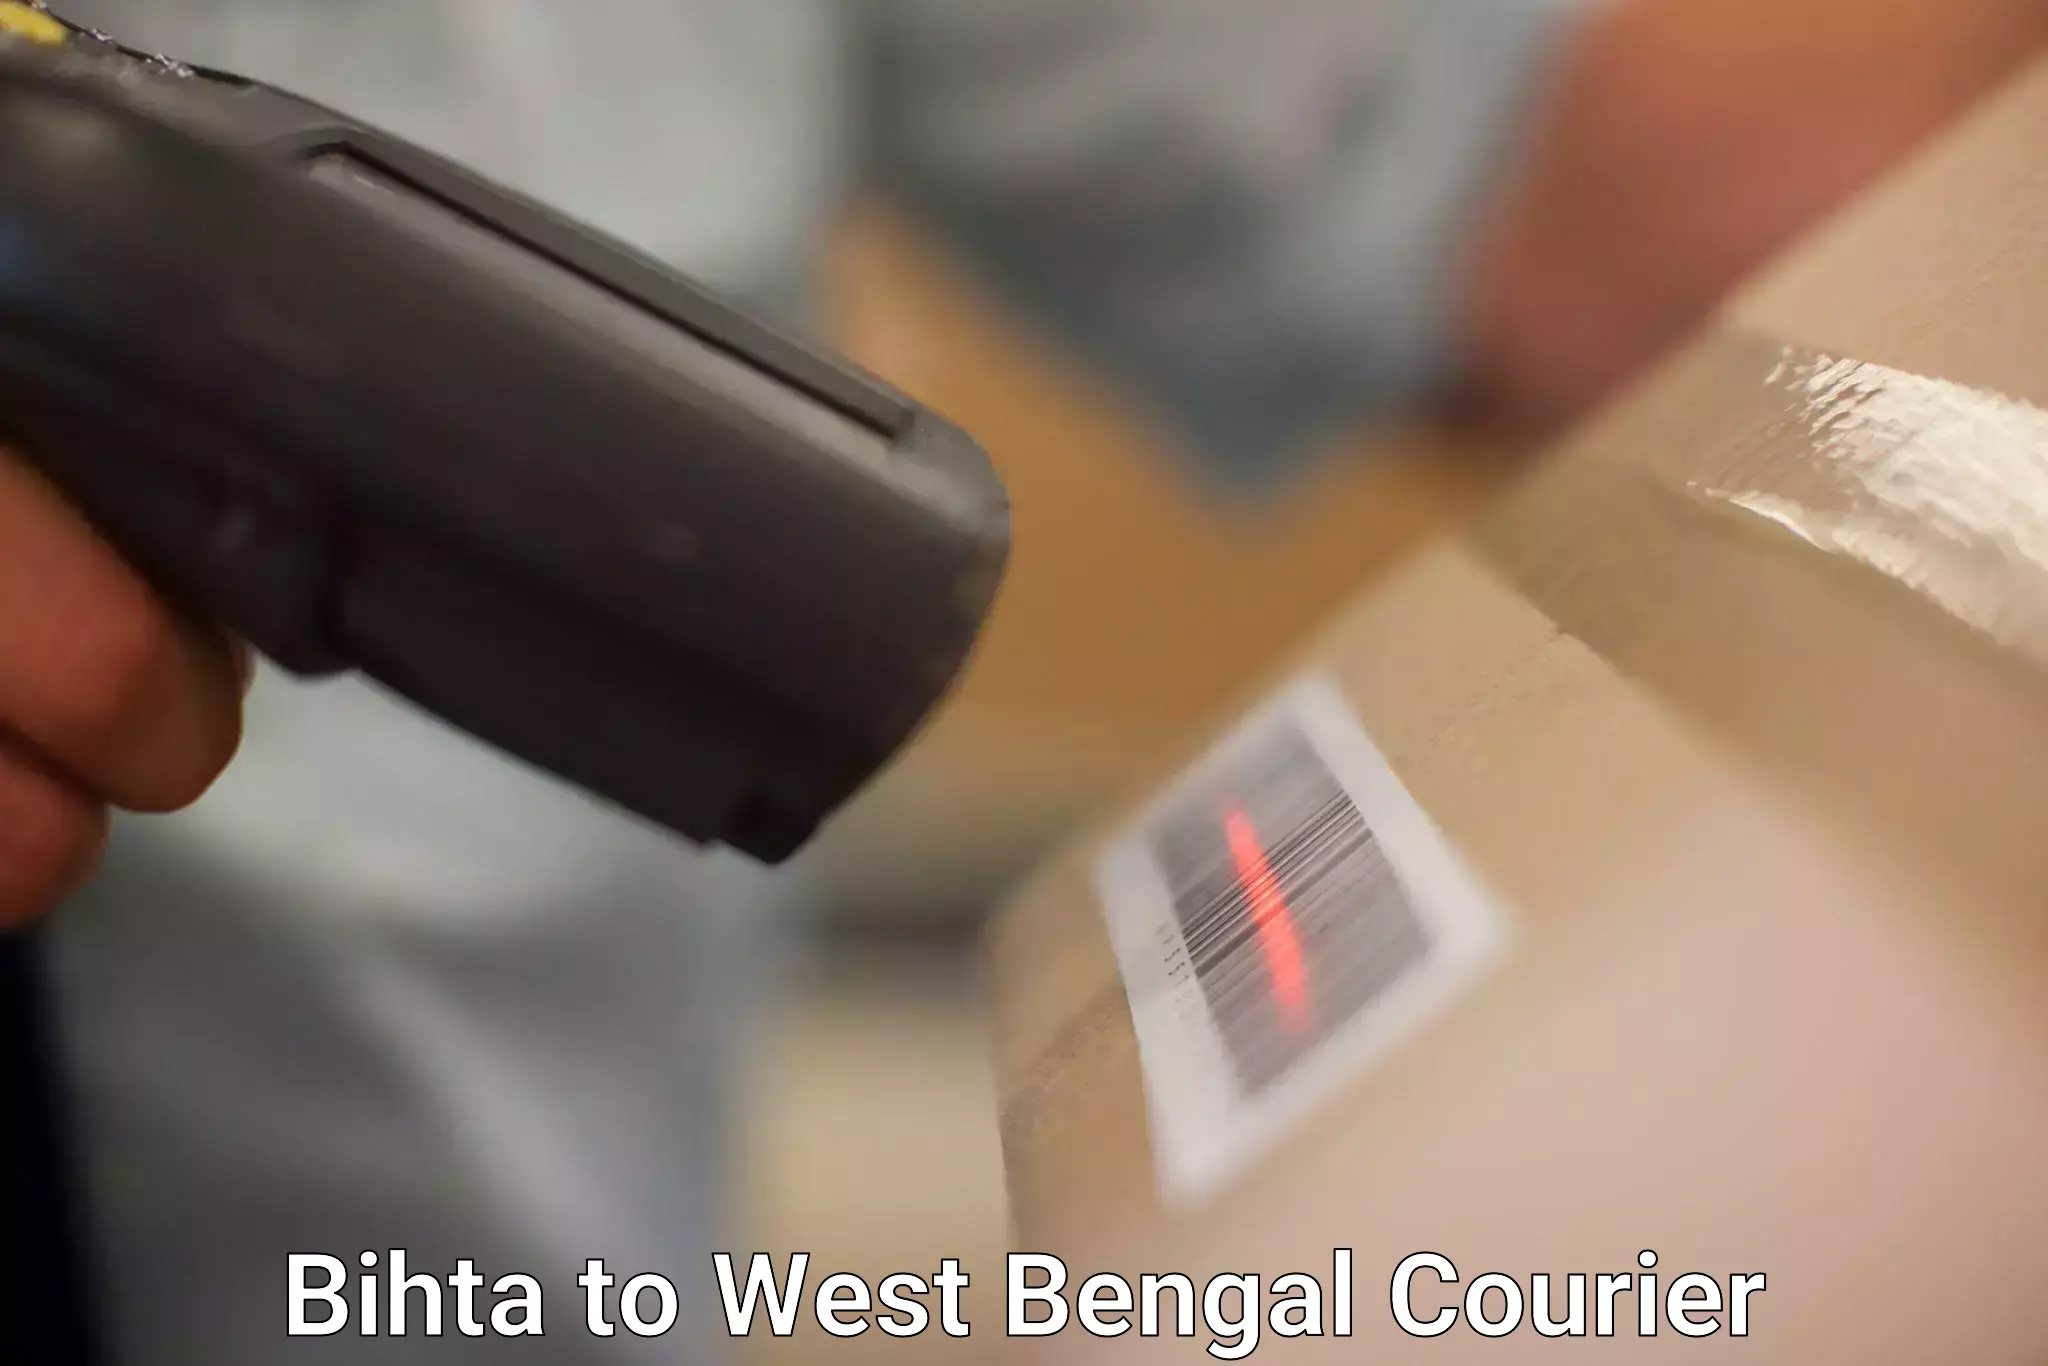 Courier service partnerships Bihta to Kolkata Port